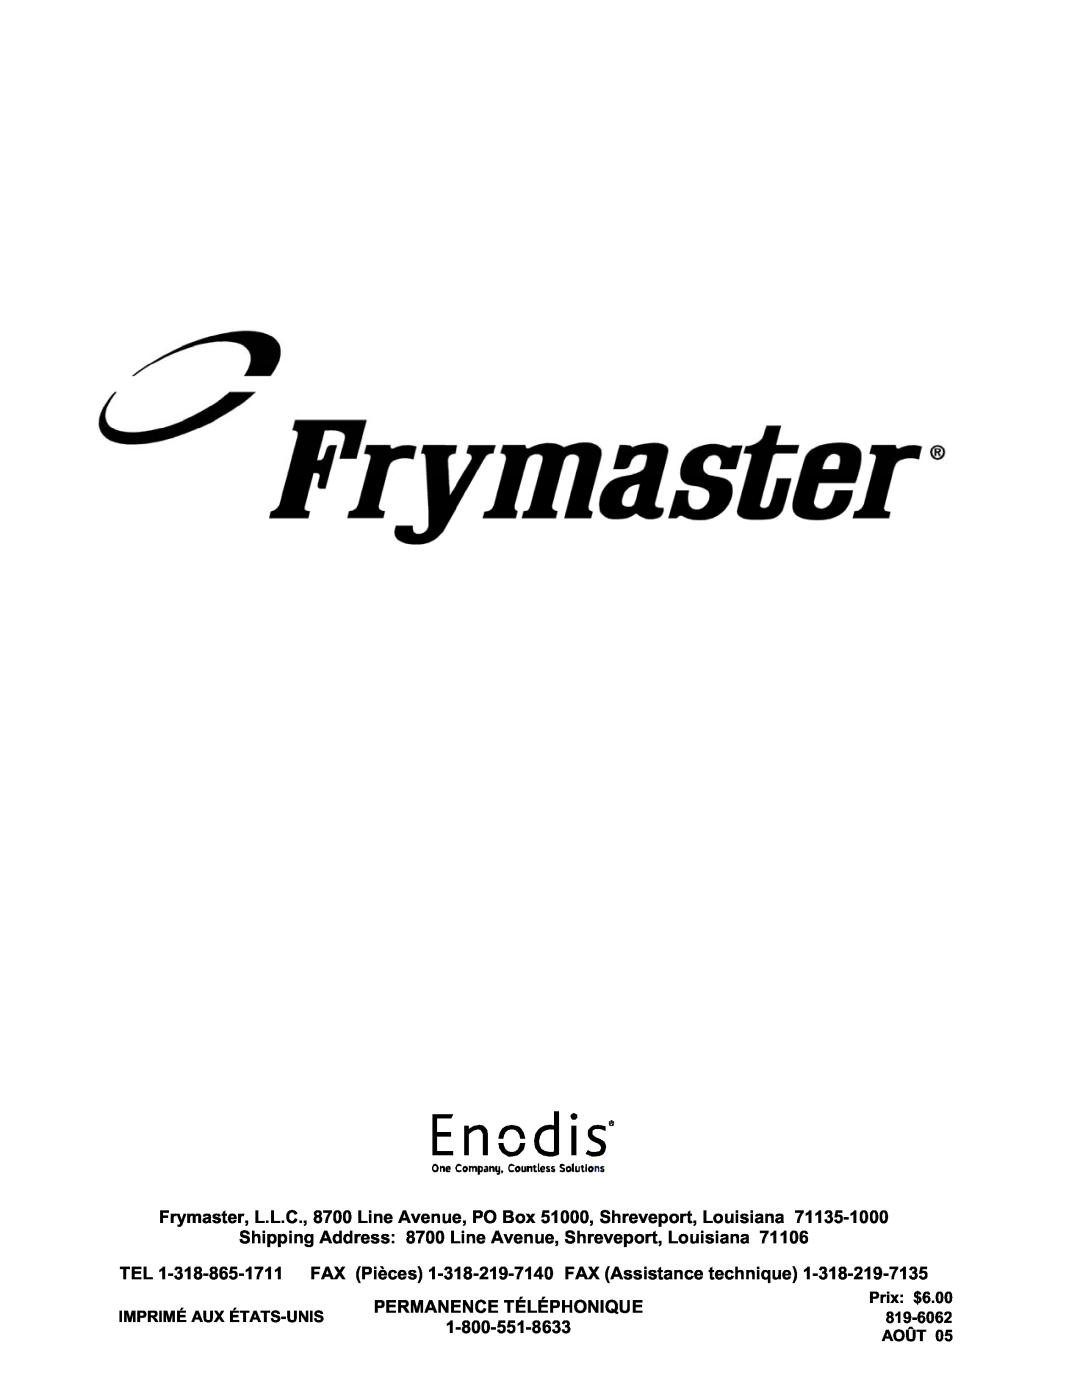 Frymaster UHC-PN Shipping Address 8700 Line Avenue, Shreveport, Louisiana, Permanence Téléphonique, Prix $6.00, 819-6062 